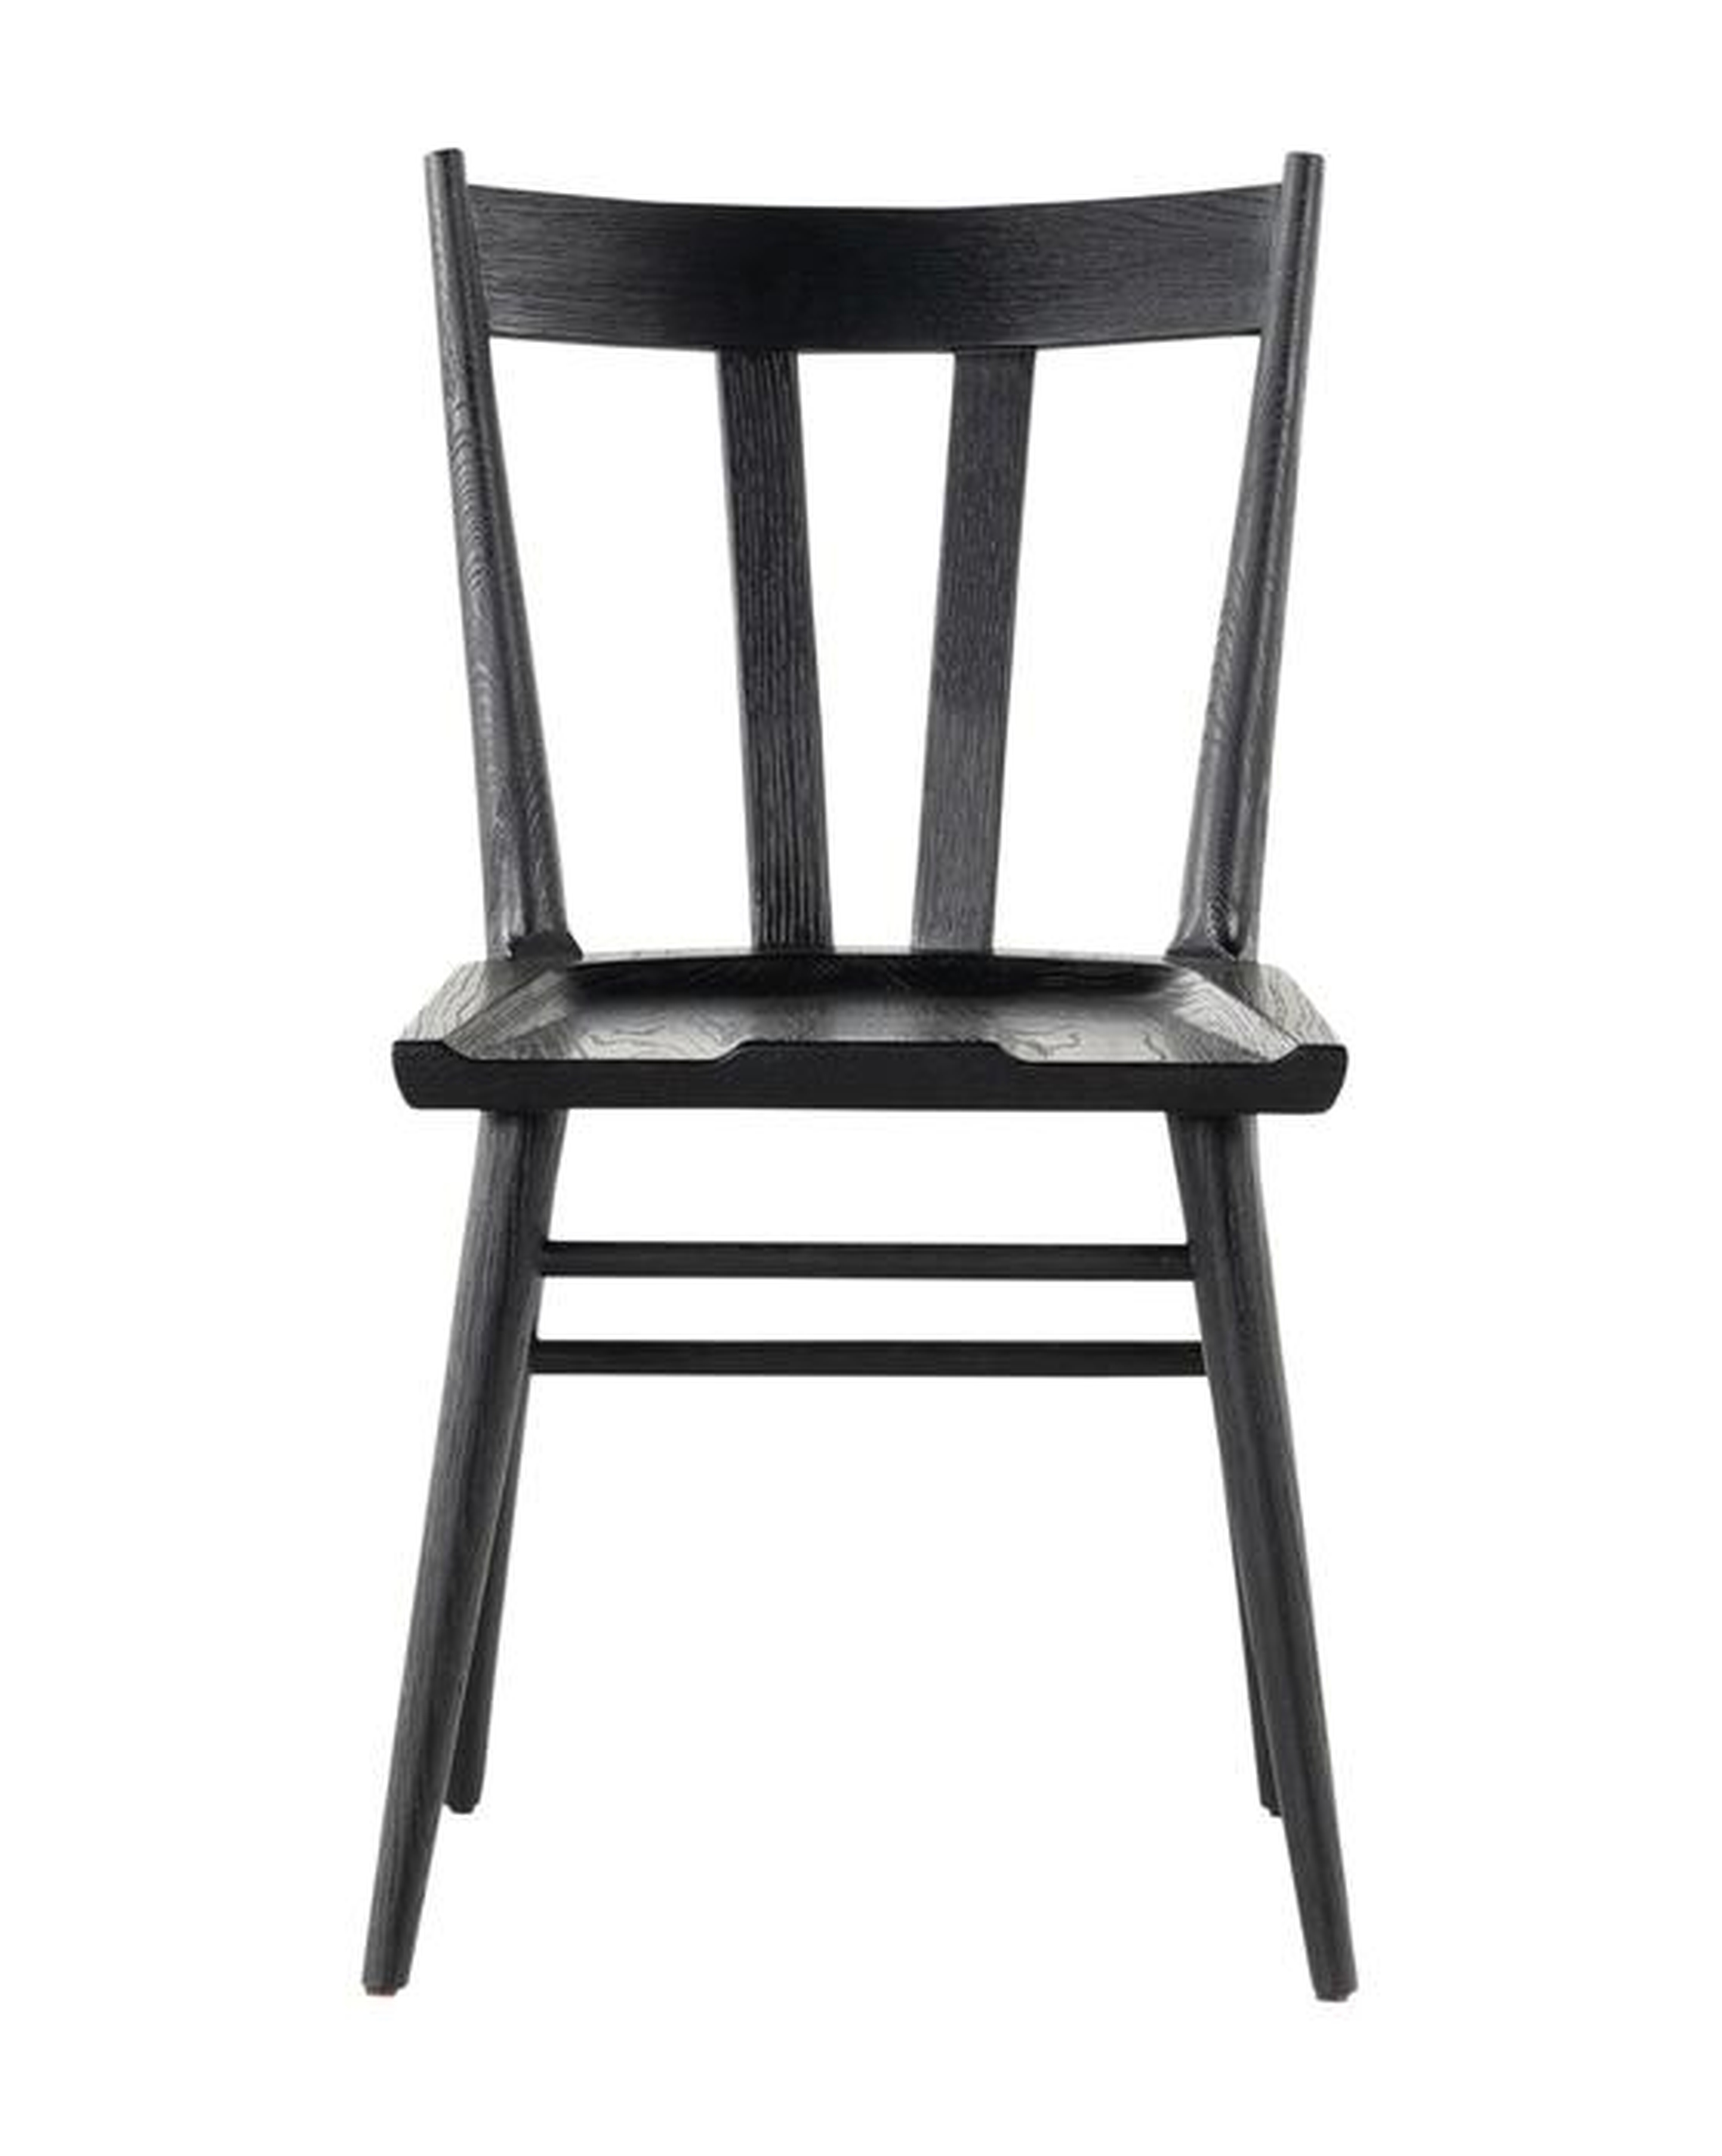 Lahargoue Chair - McGee & Co.